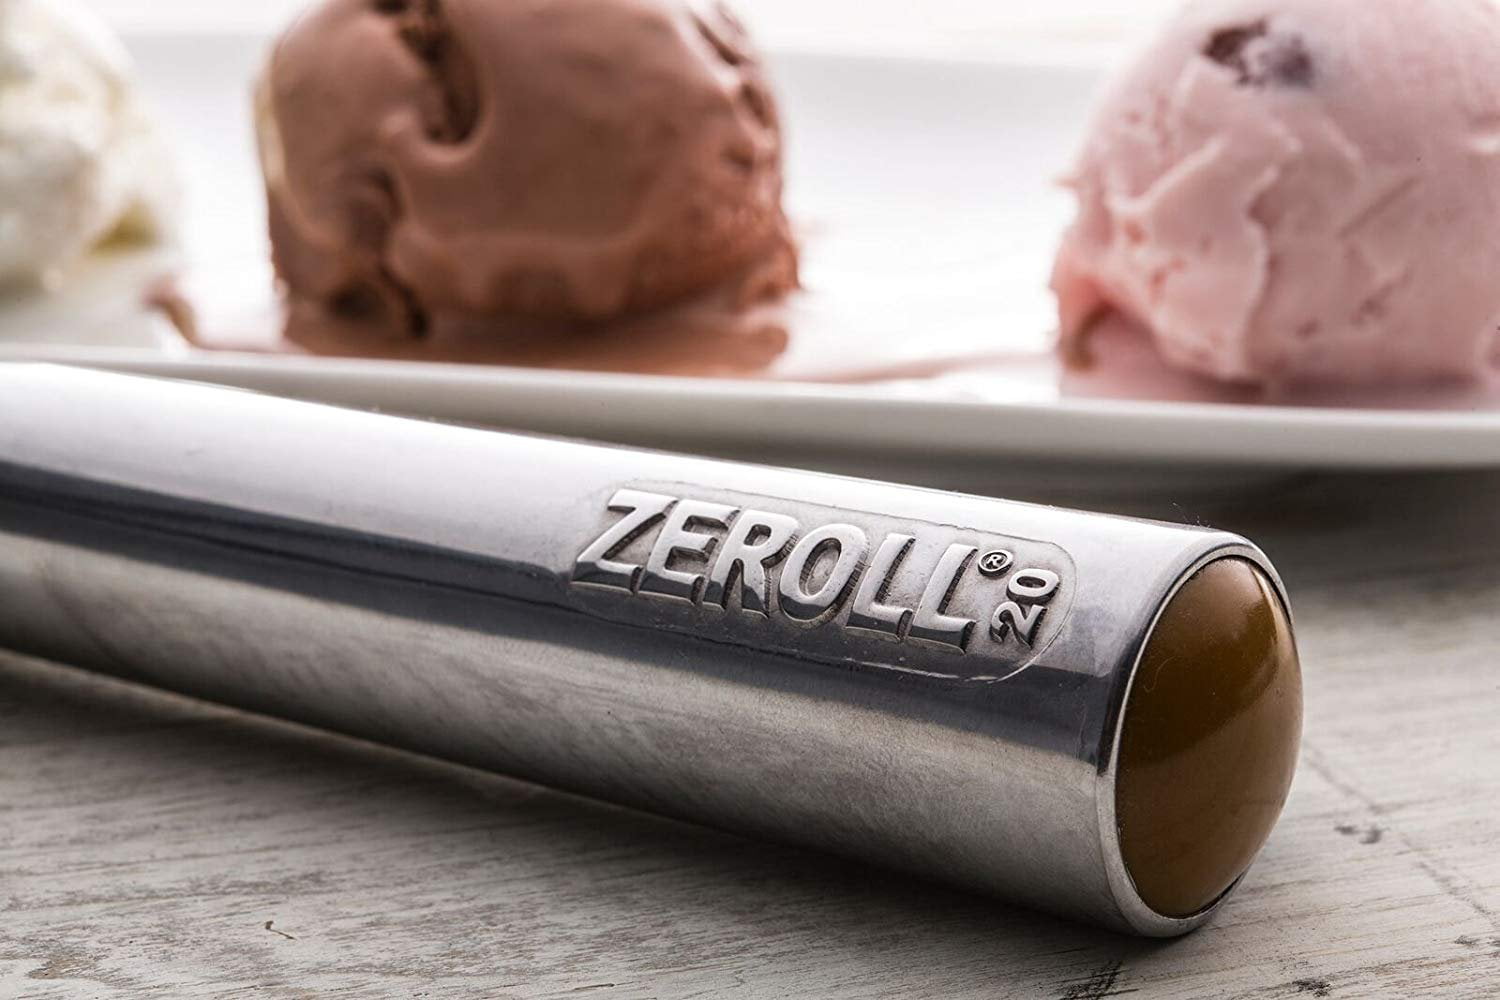 Zeroll 1020 Zeroll® Original Ice Cream Scoop Size 20 (2 Oz.) Gold End Cap